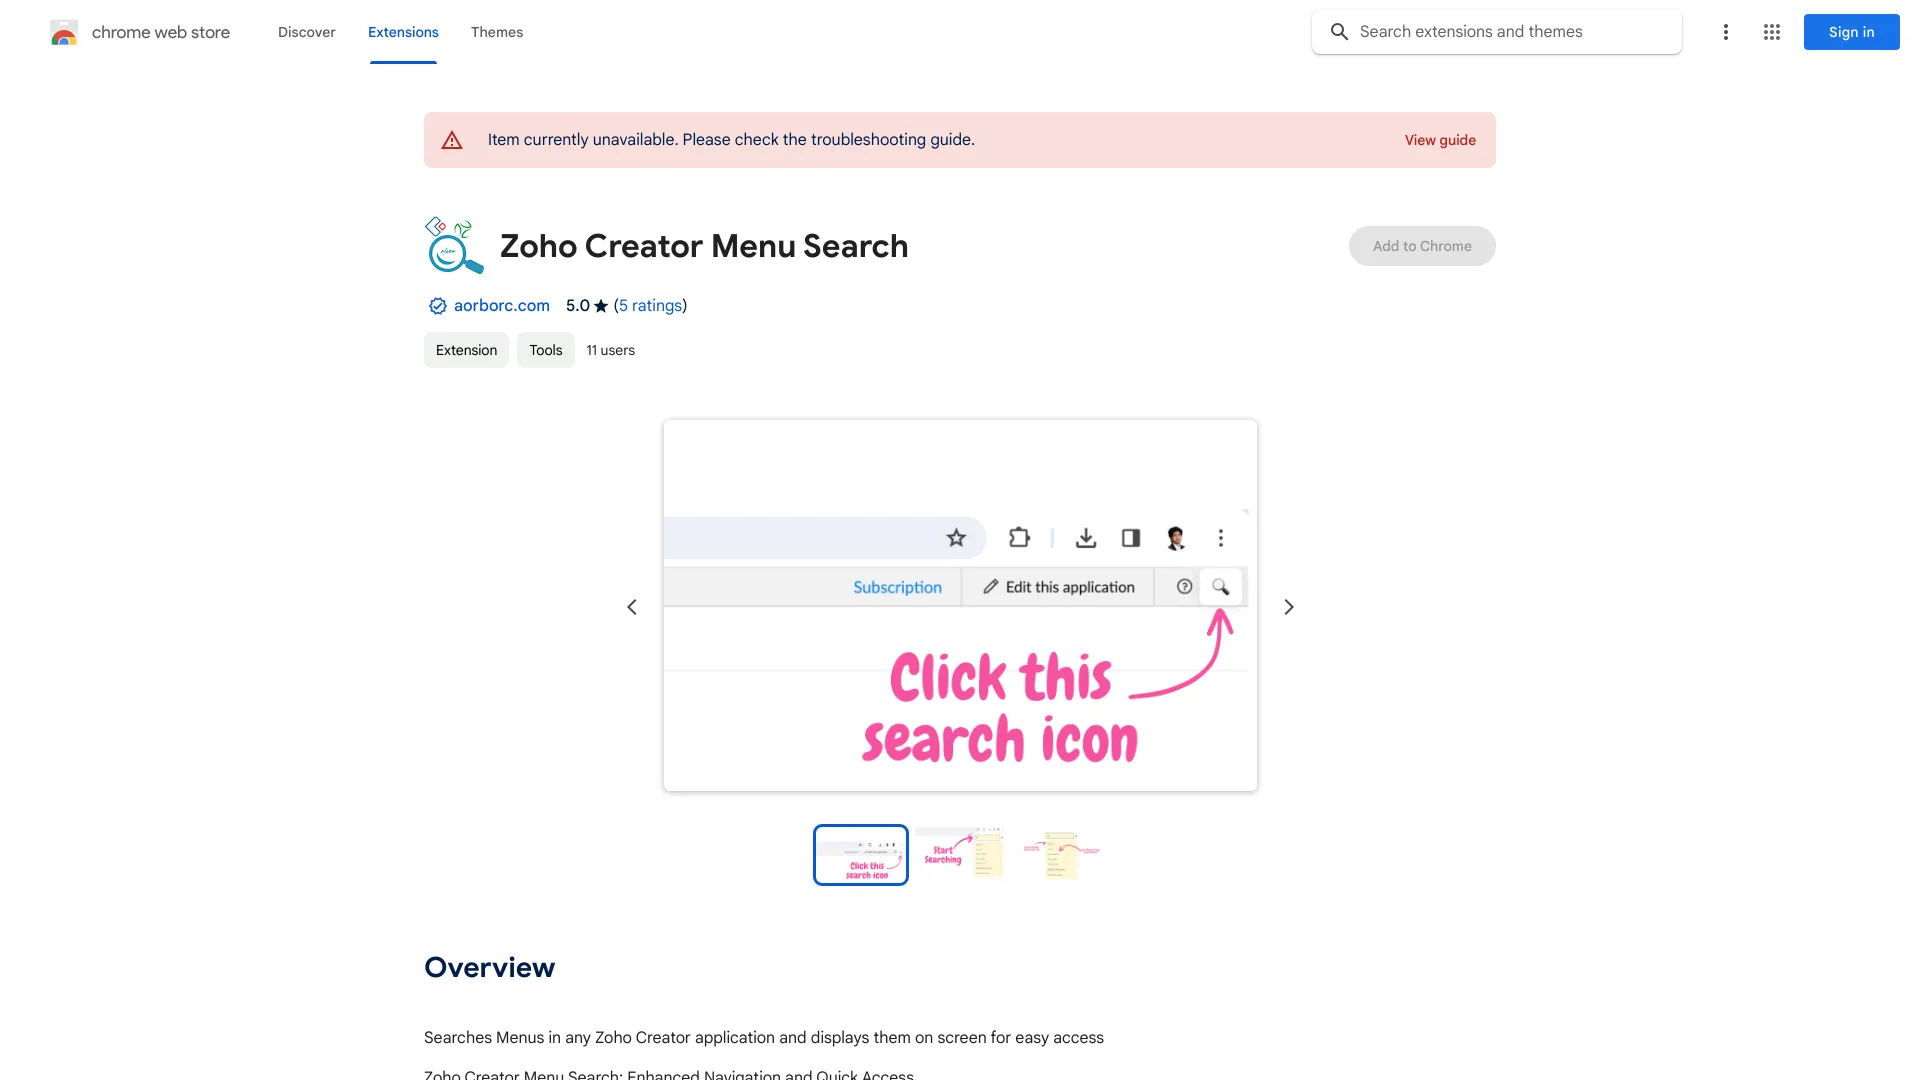 Zoho Creator Menu Search